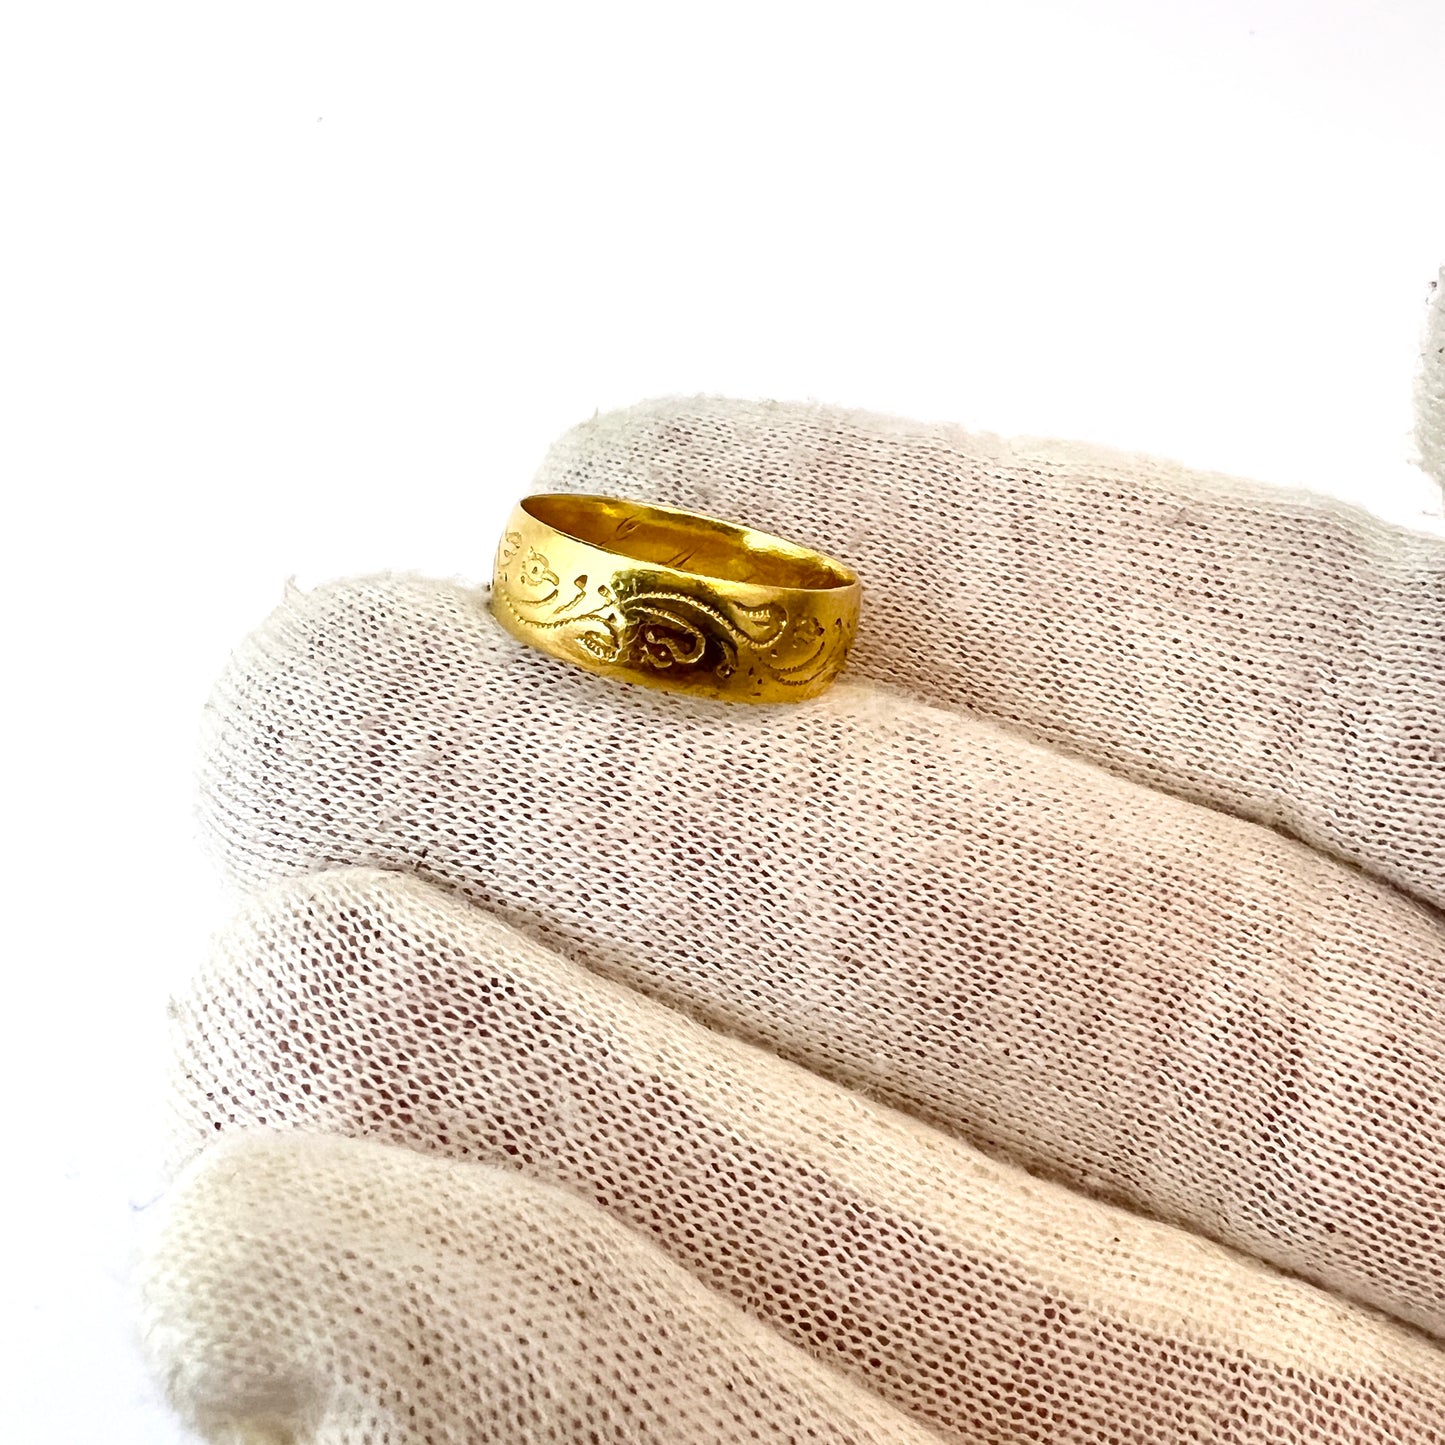 Graumann, Sweden 1895. Antique 23K Gold Wedding Band Ring.